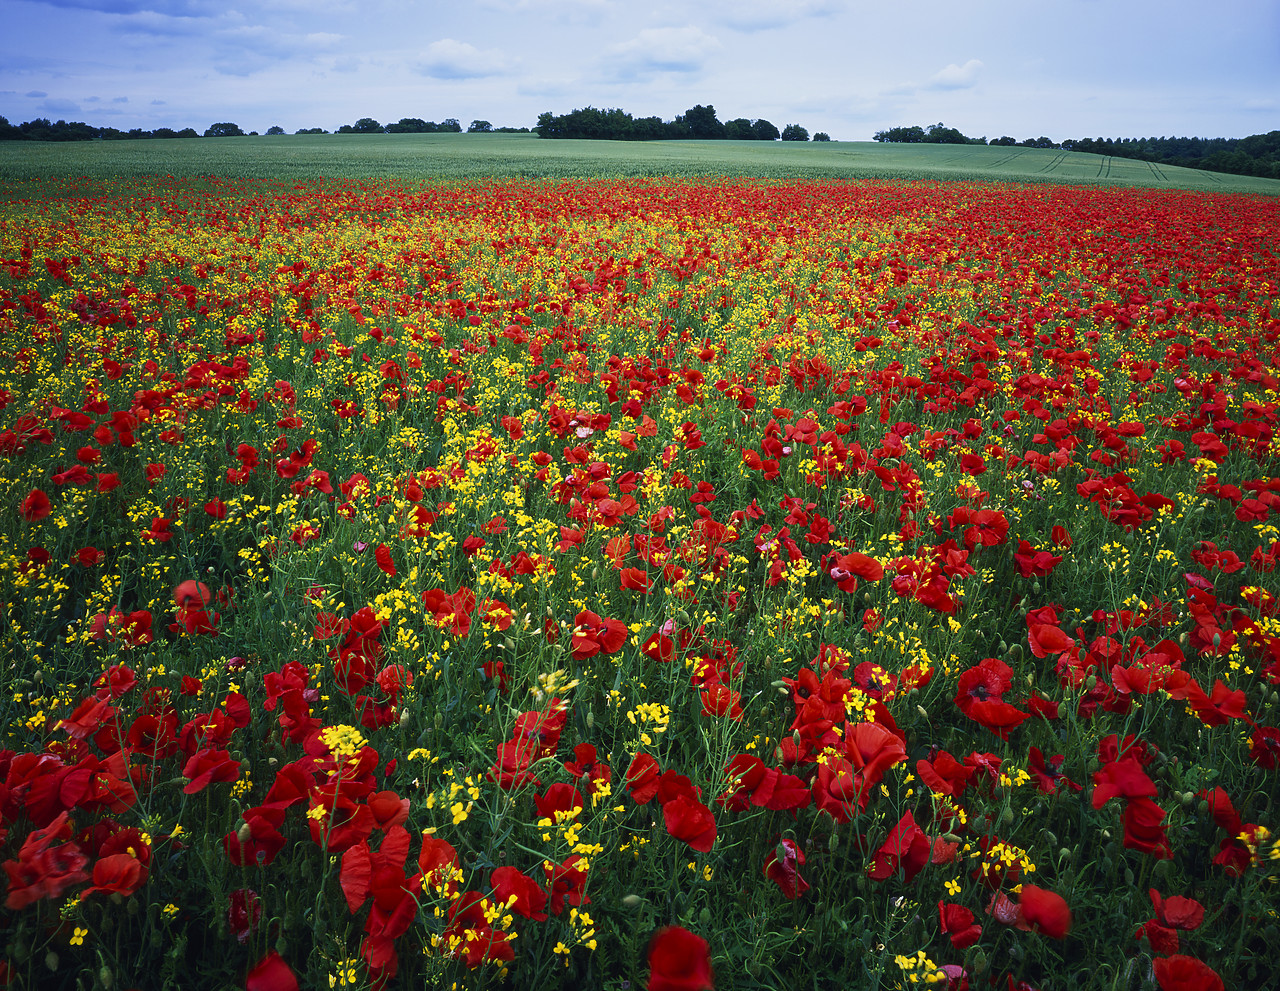 #040196-2 - Field of Poppies, Wethersfield, Essex, England